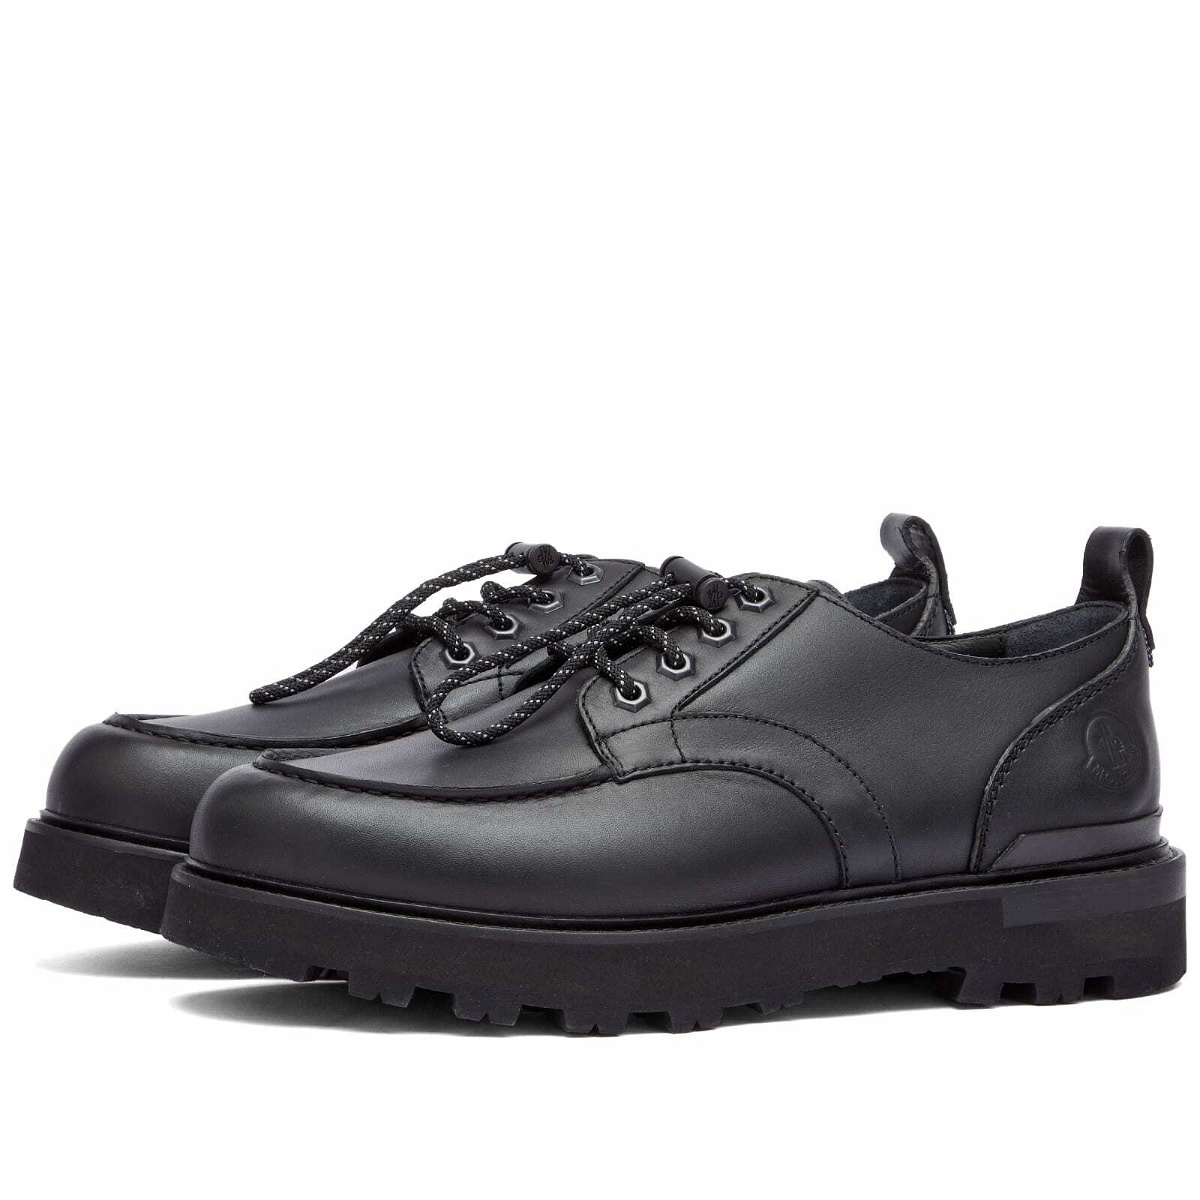 Moncler Men's Peka Derby Shoes in Black Moncler